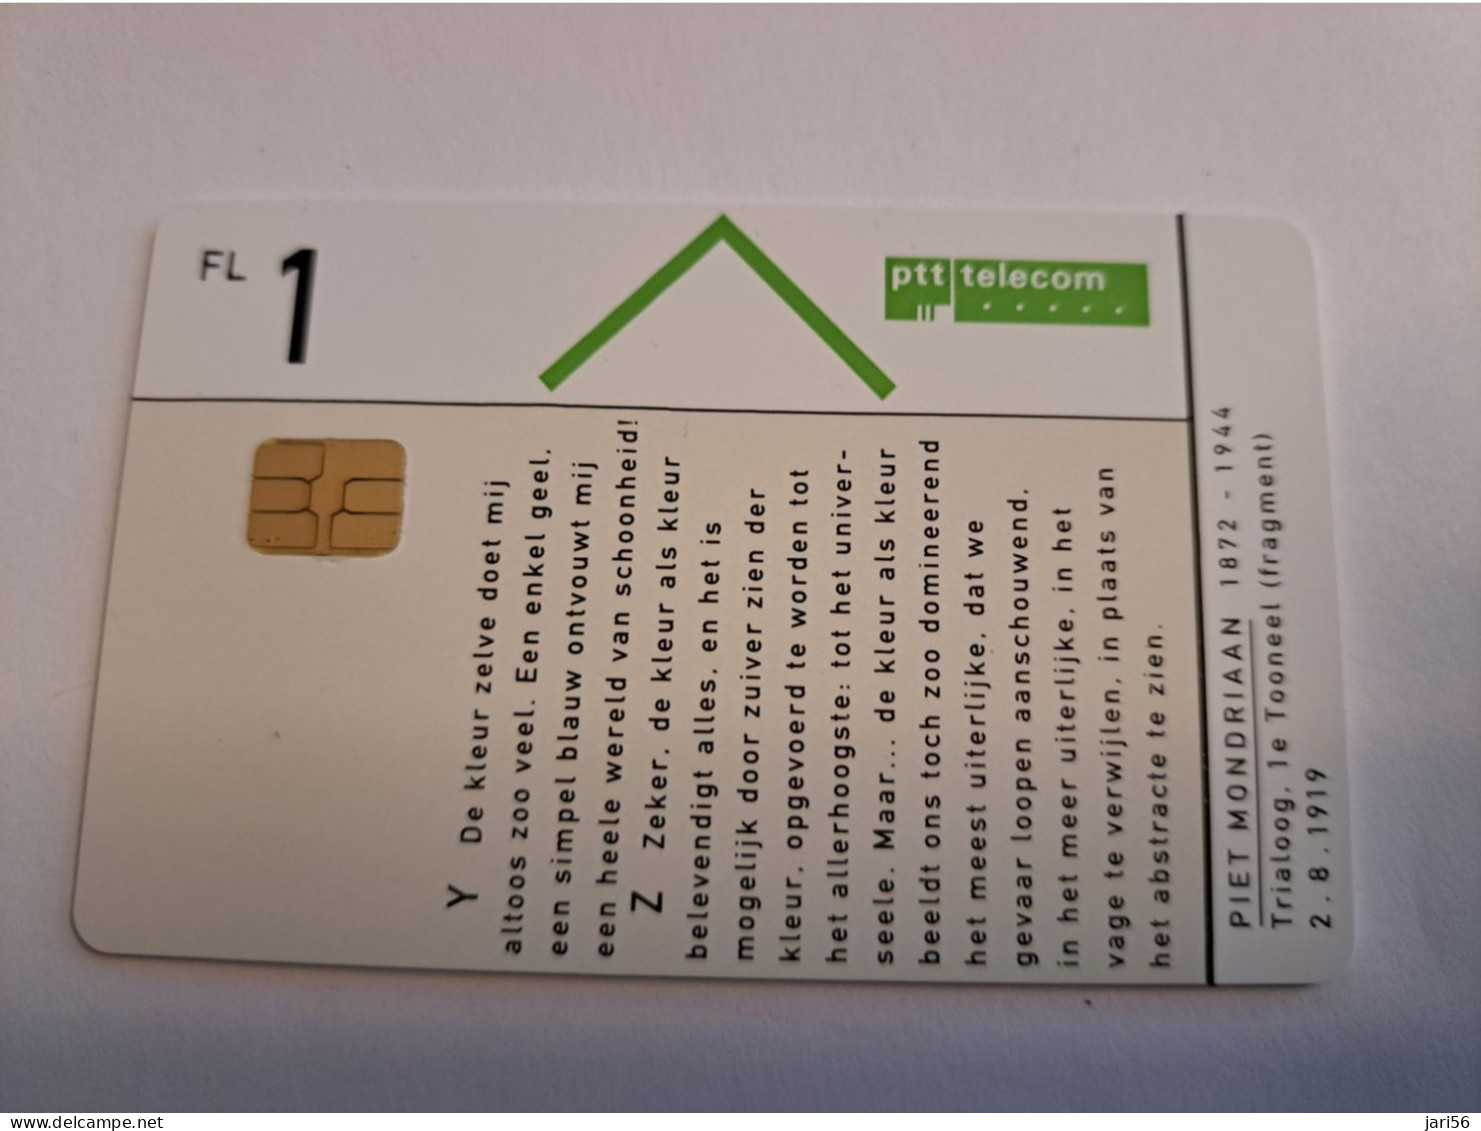 NETHERLANDS  HFL 1,00    CC  MINT CHIP CARD   / COMPLIMENTSCARD / FROM SERIE / MINT   ** 15956** - [3] Handy-, Prepaid- U. Aufladkarten